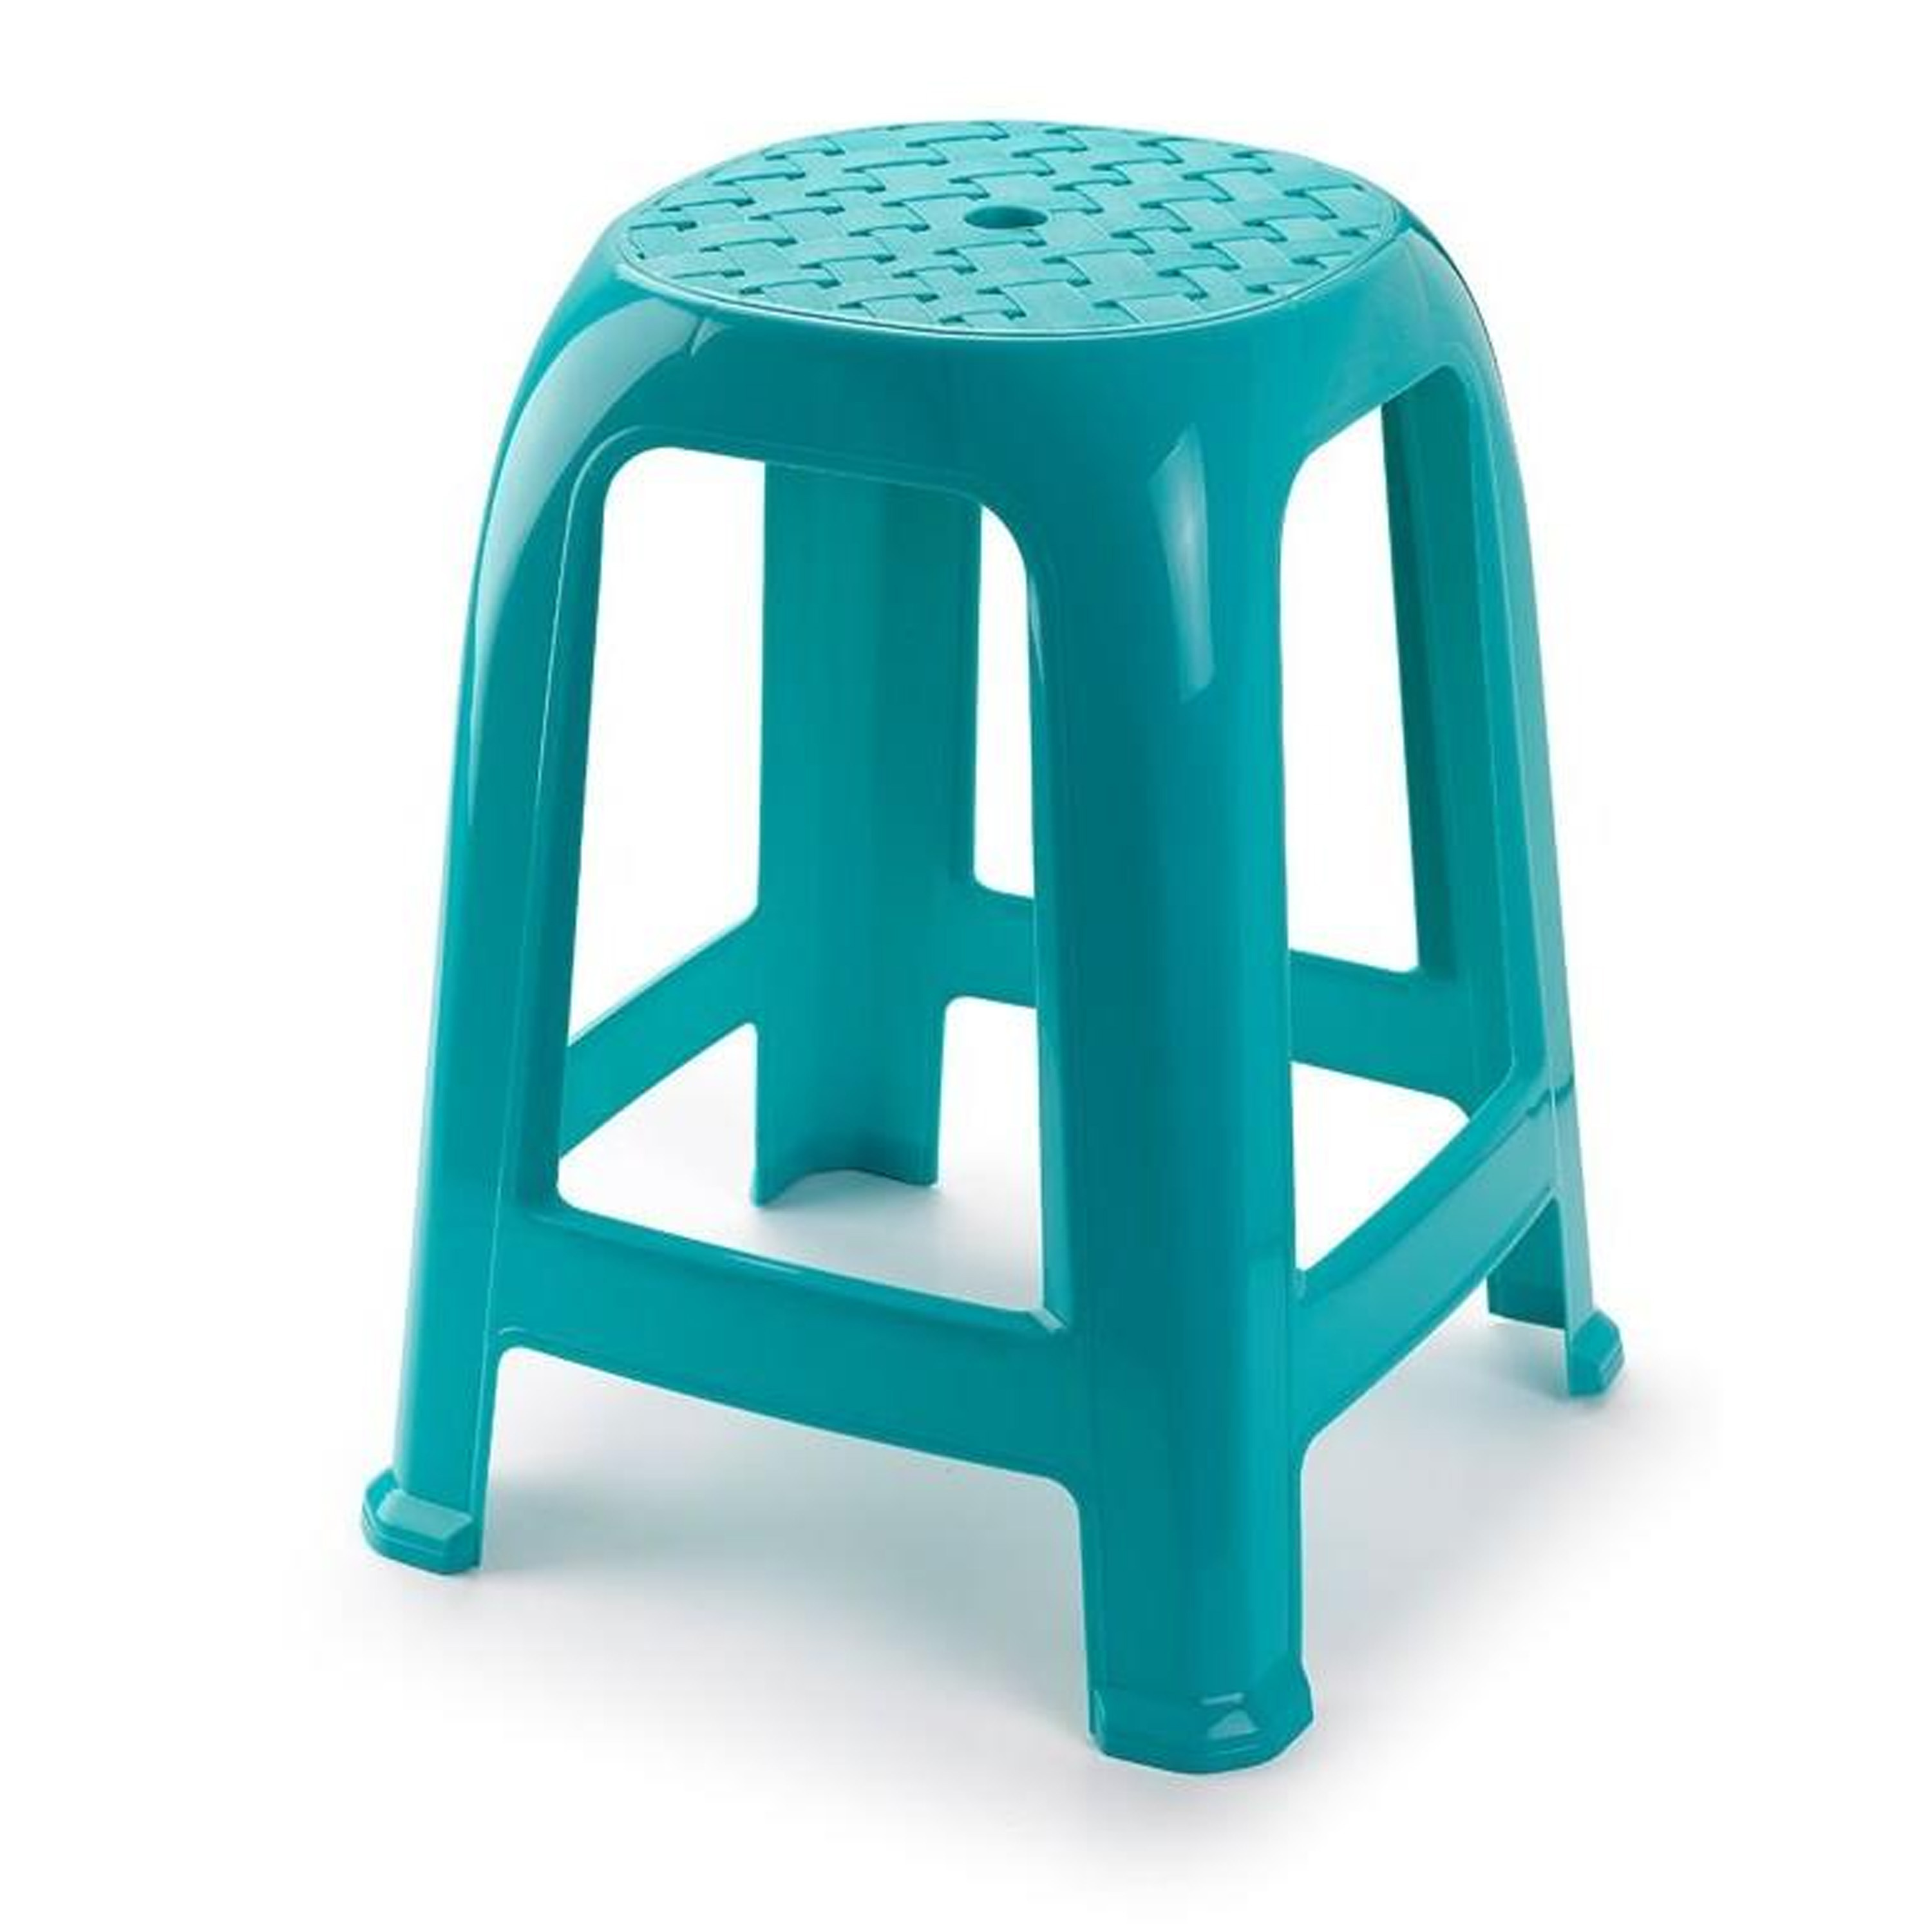 PlasticForte Keukenkrukje/opstapje - Handy Step - turquoise blauw - kunststof - x x cm -